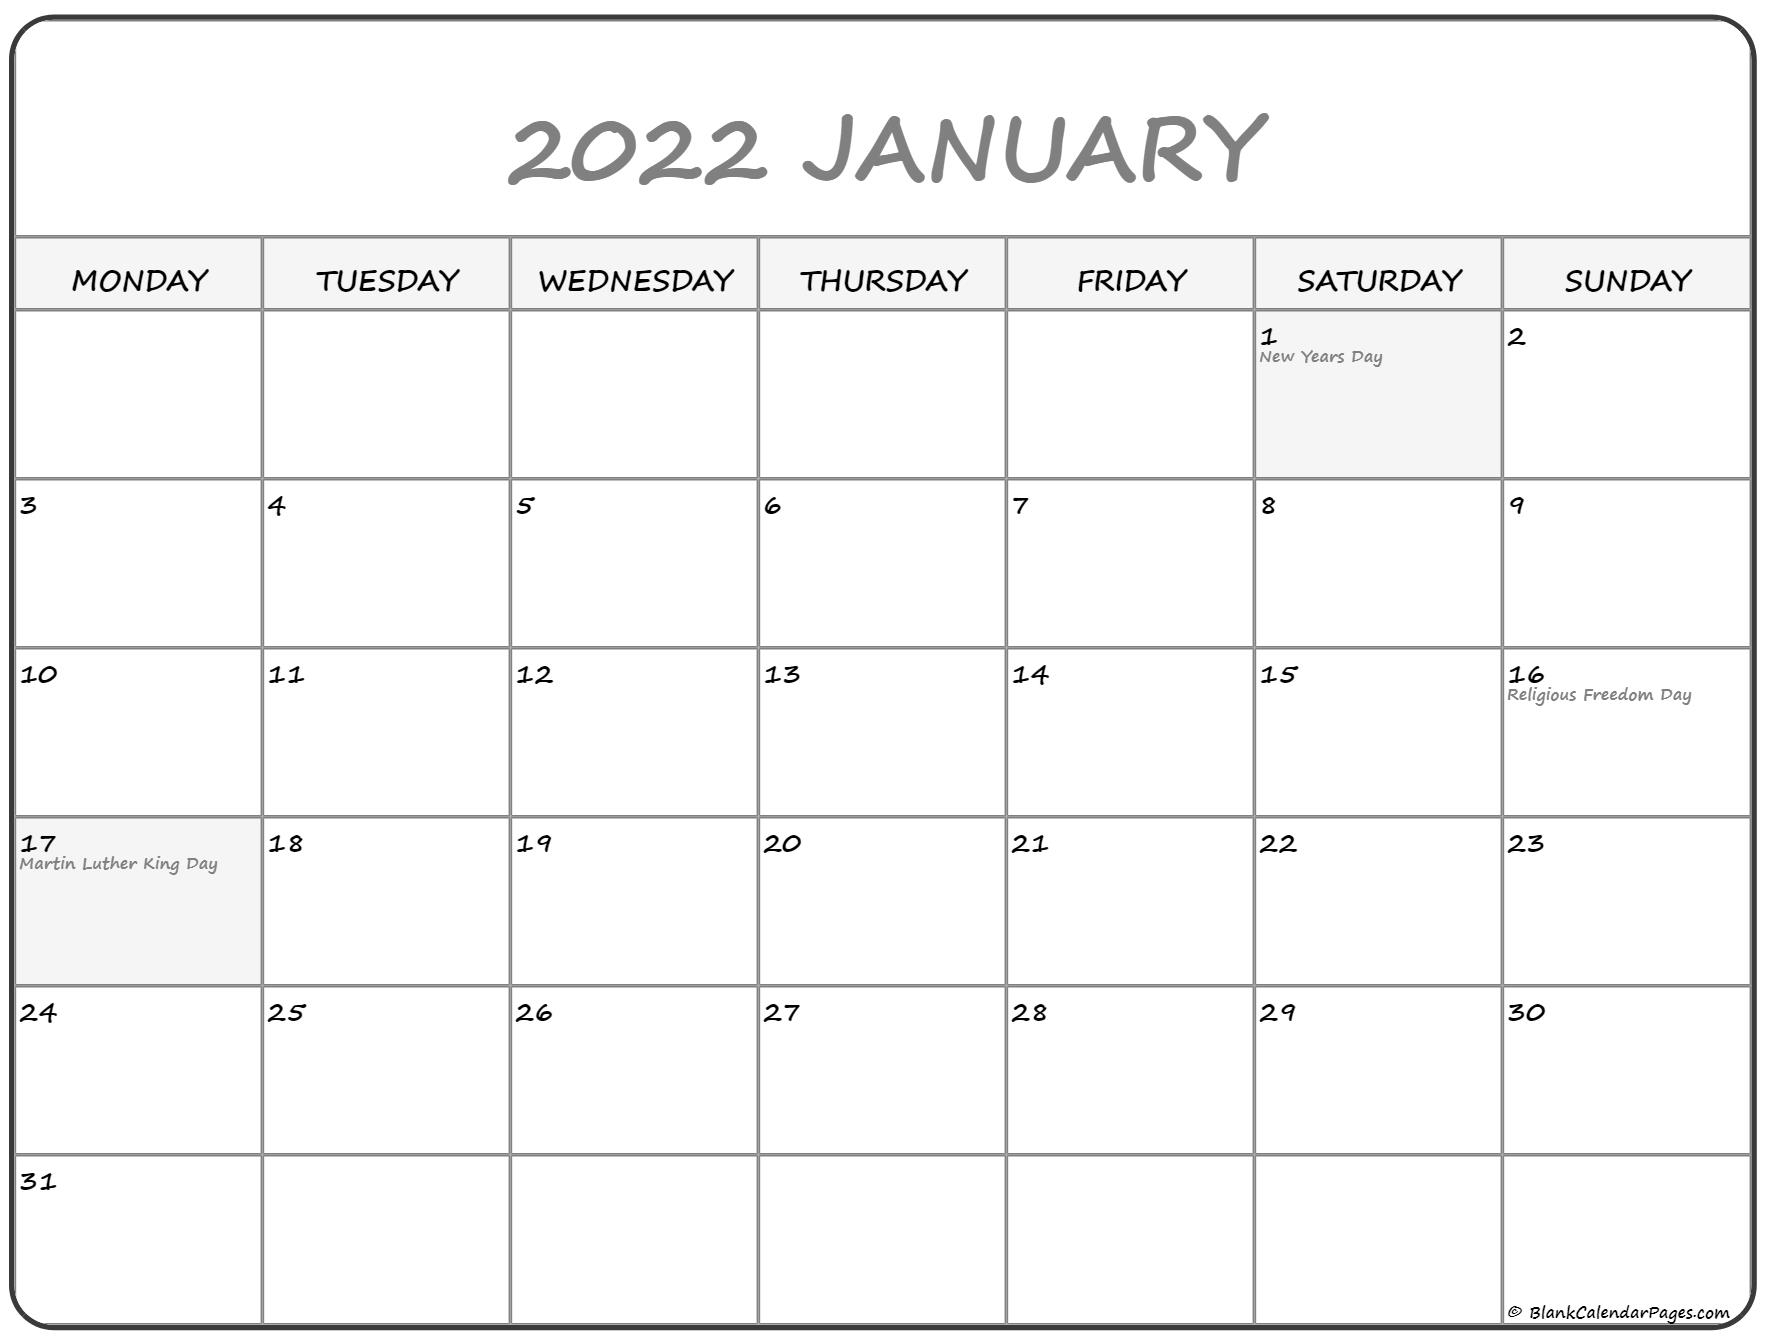 January 2022 Monday Calendar | Monday To Sunday